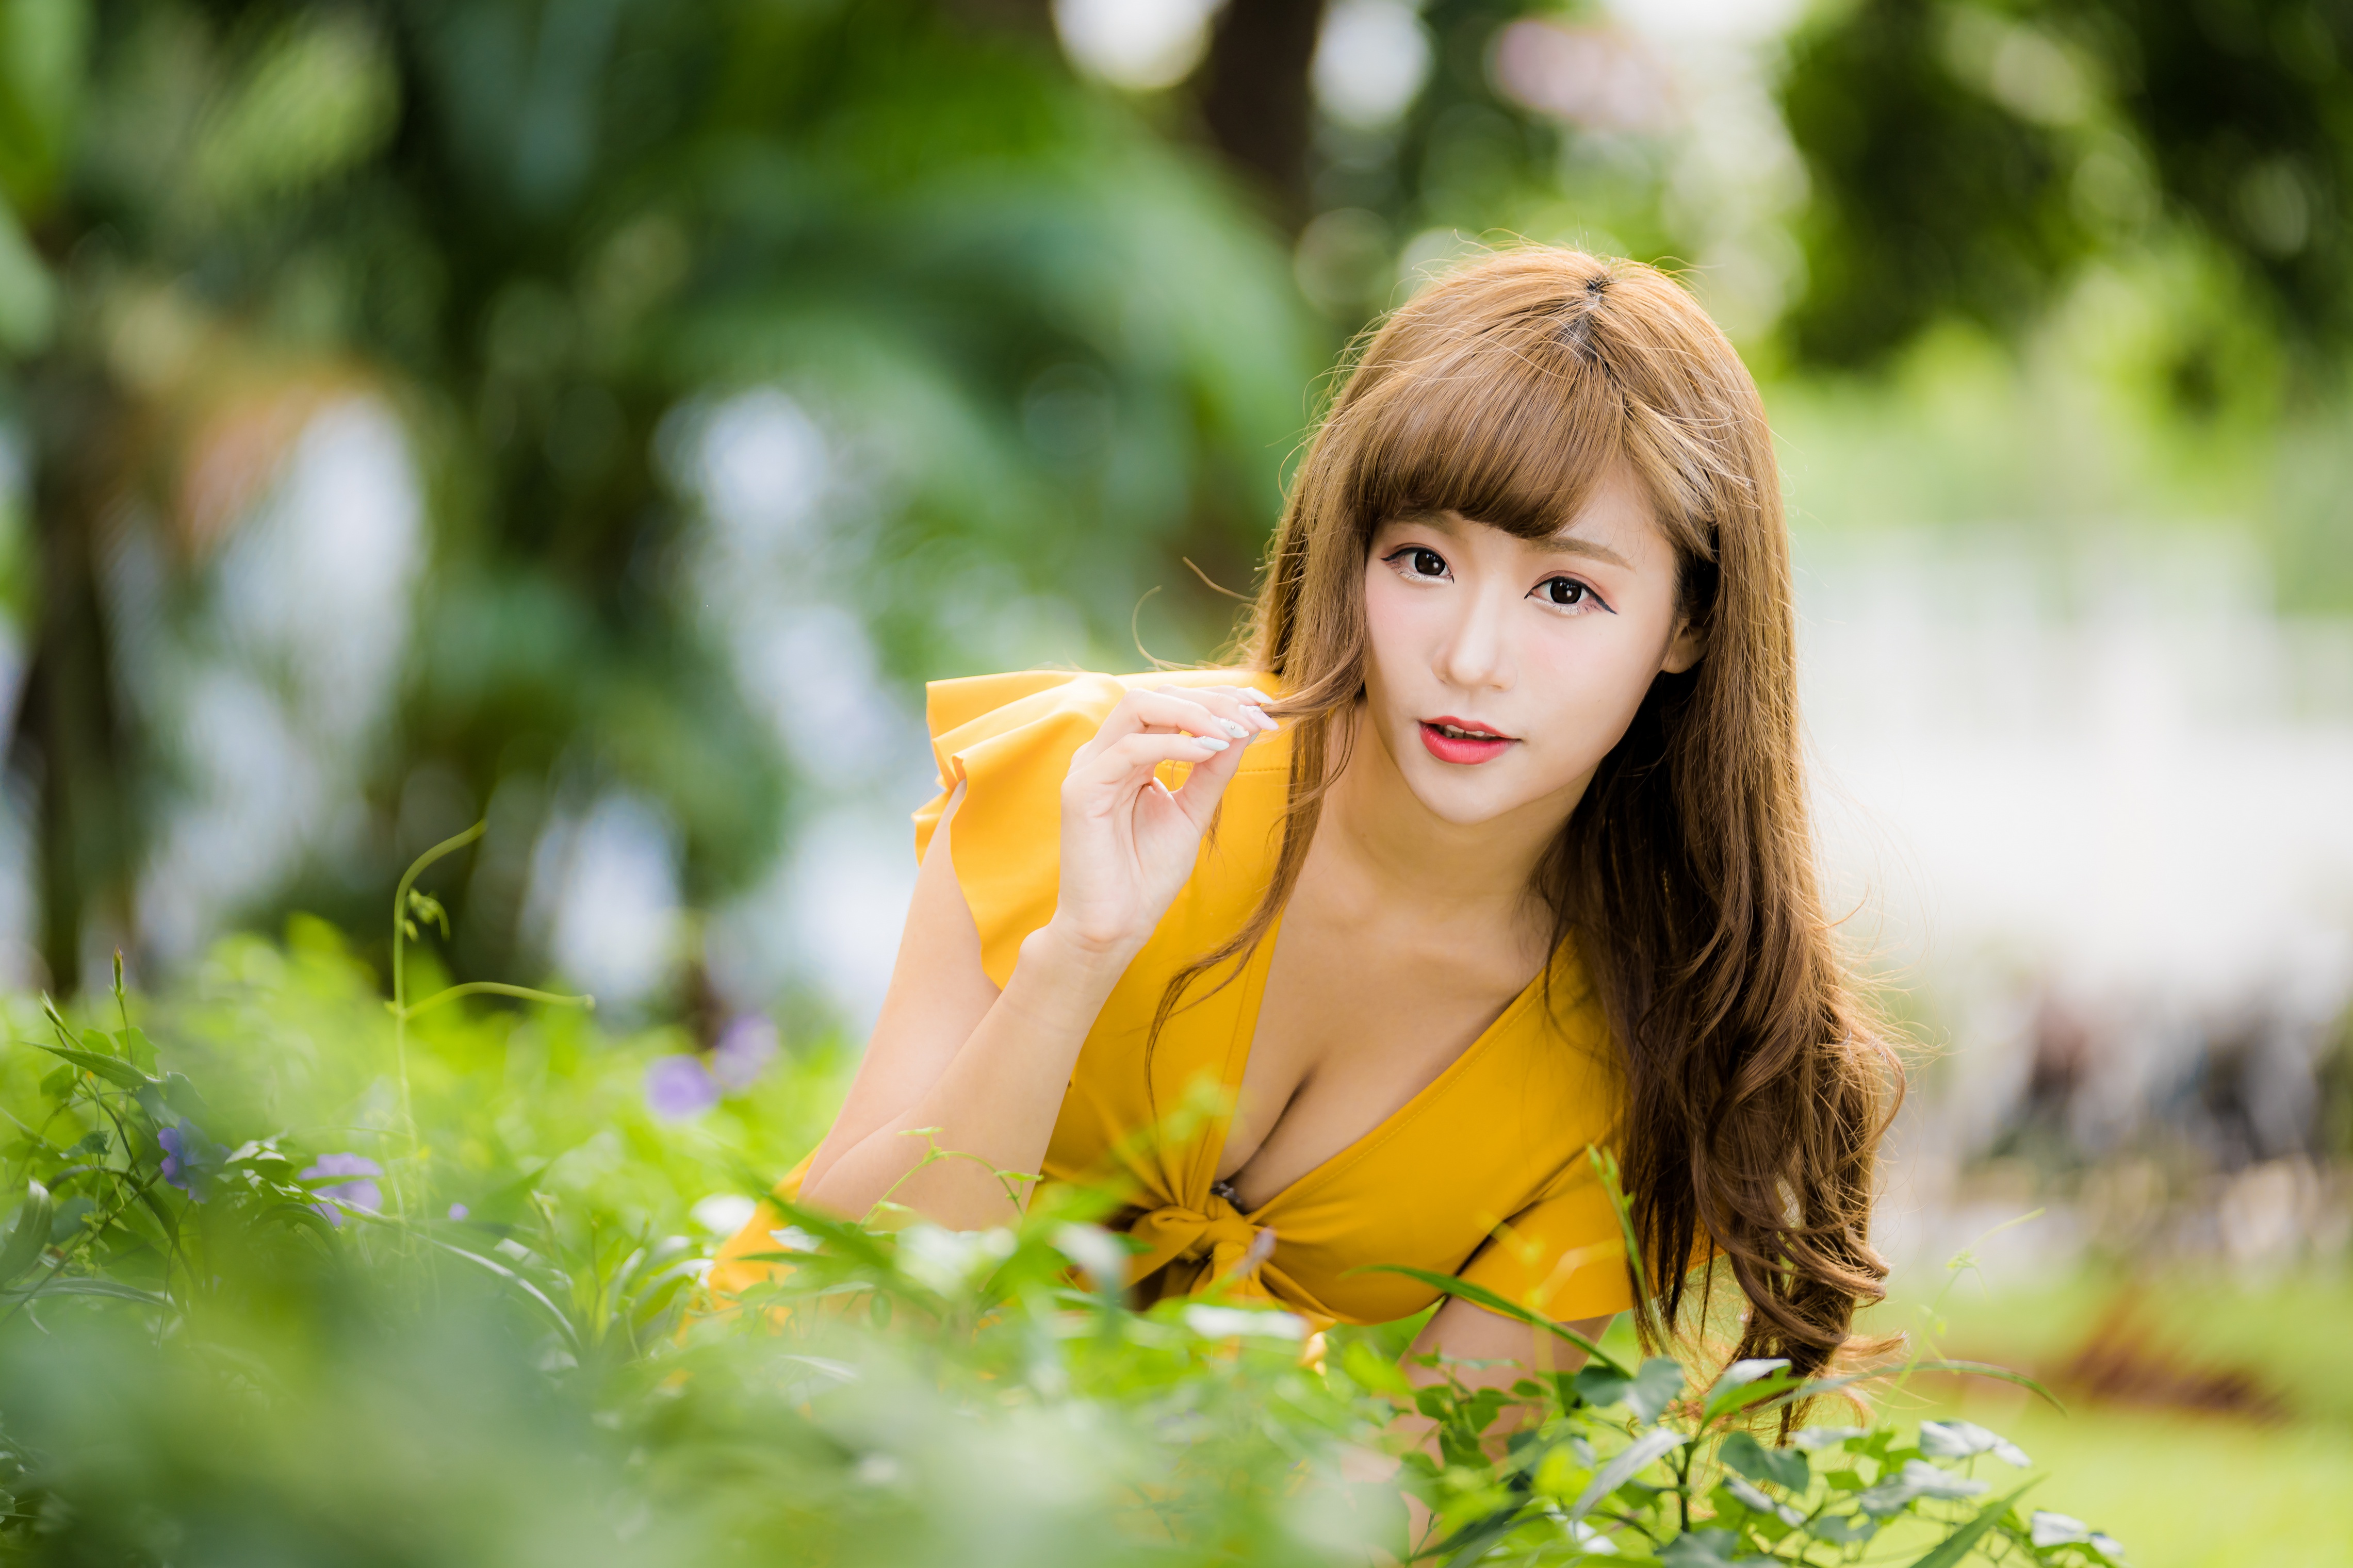 Asian Women Model Long Hair Brunette Yellow Tops Trees Bushes Grass Depth Of Field 4562x3041